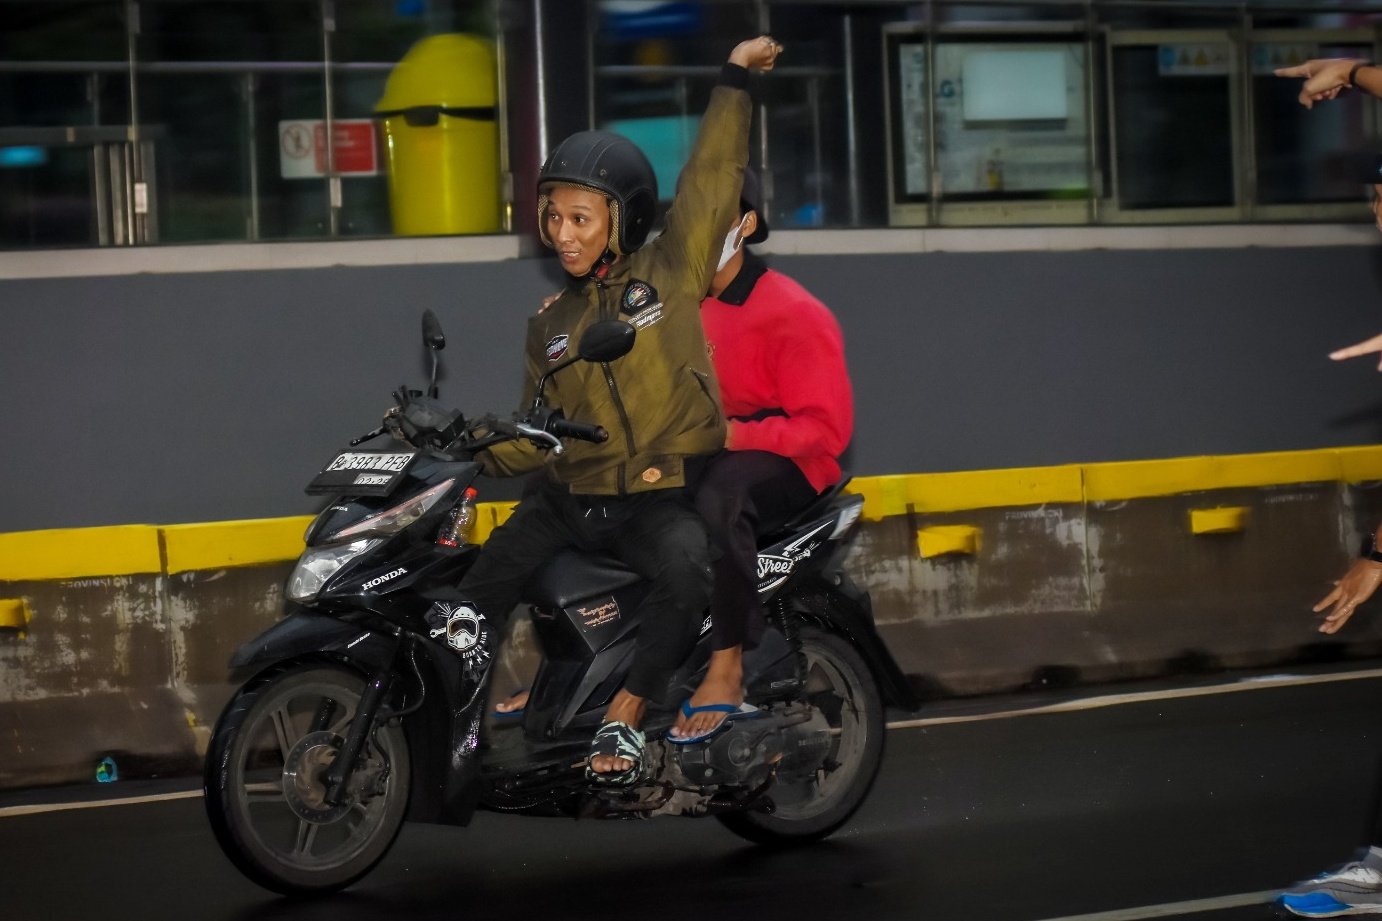 Kena Deh! Tampang Pejambret di CFD Thamrin Jakarta Viral Usai Terpotret Kamera Fotografer 